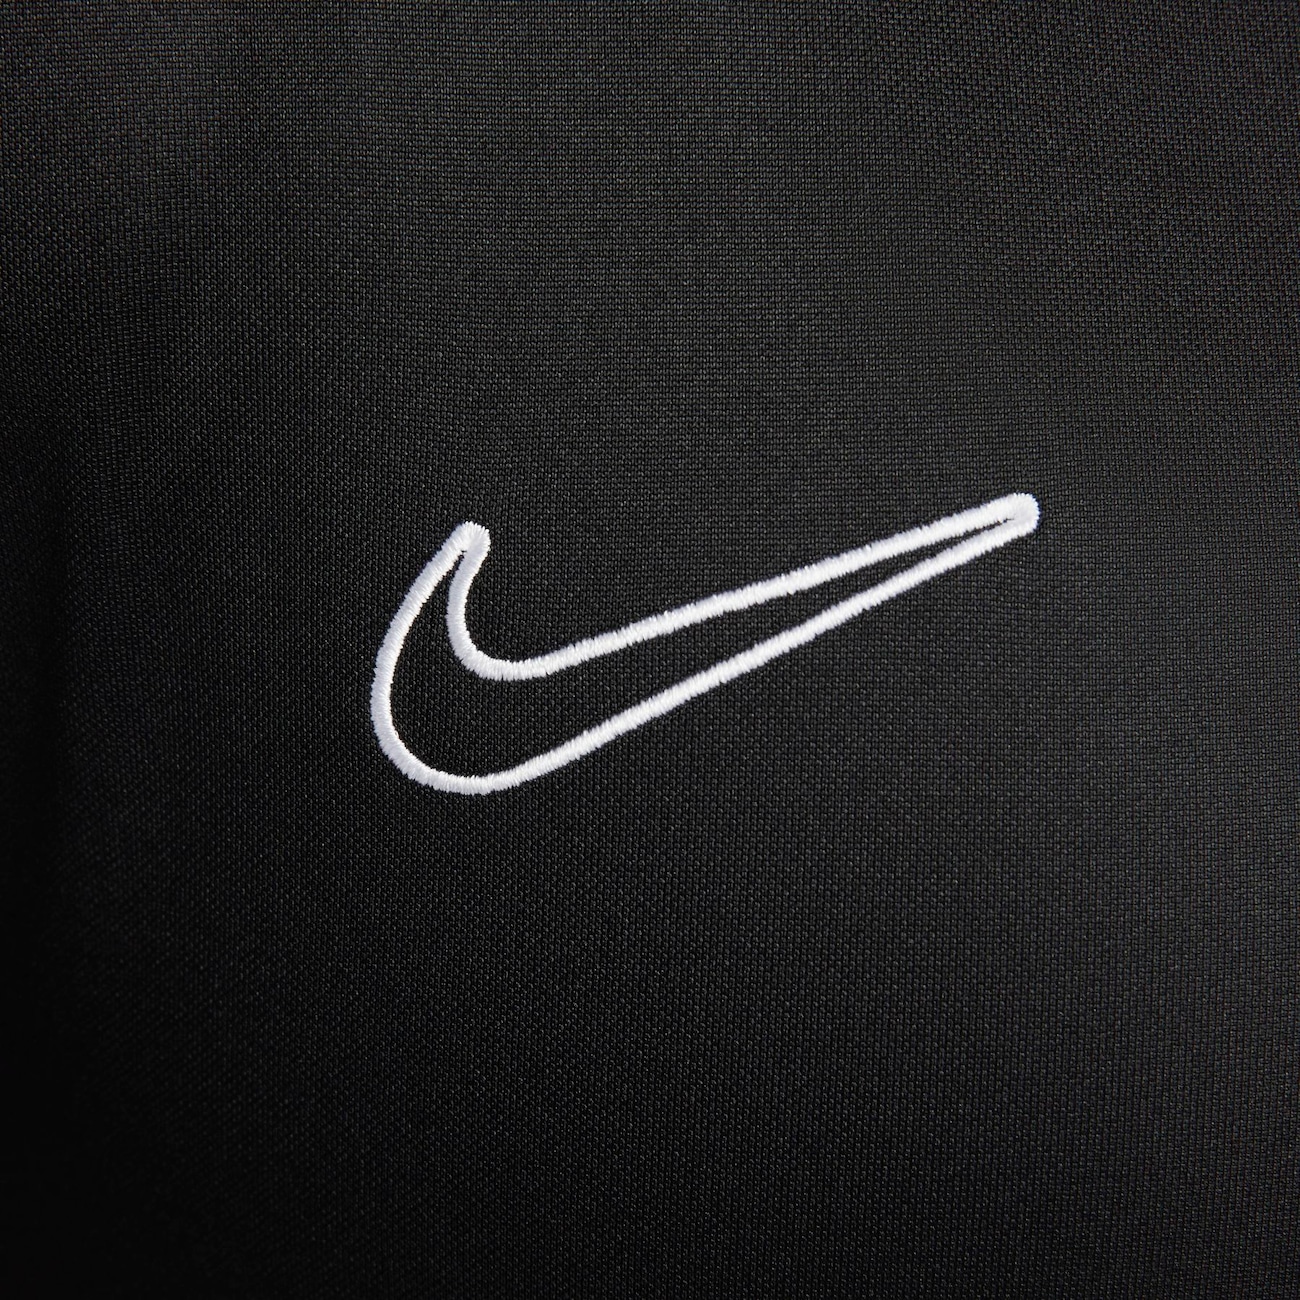 Camiseta Nike Dri-FIT Academy 23 - Feminina